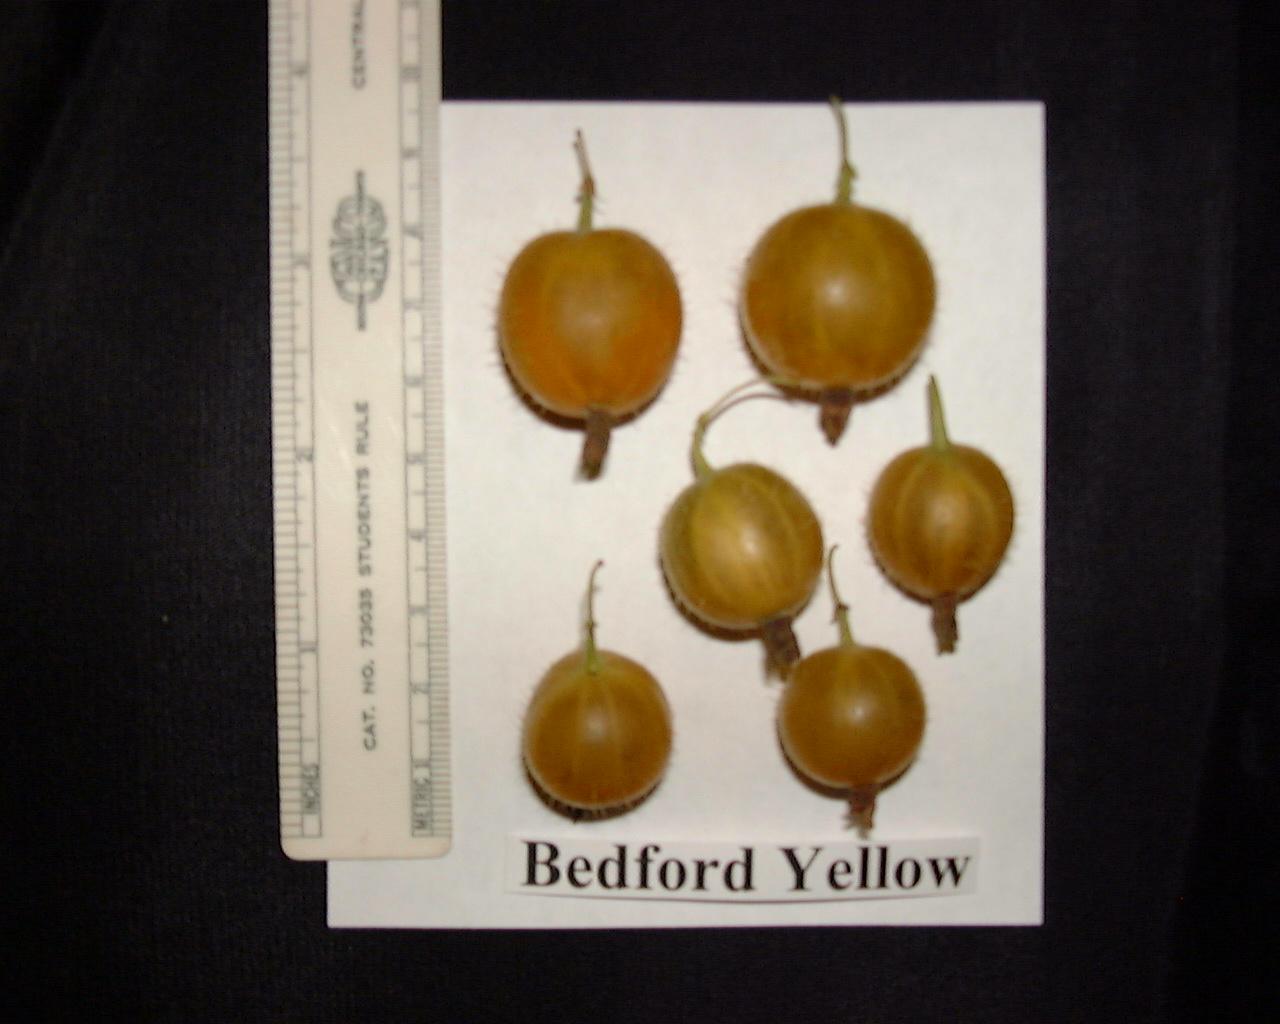 Bedford Yellow (Photo: Steve McKay)